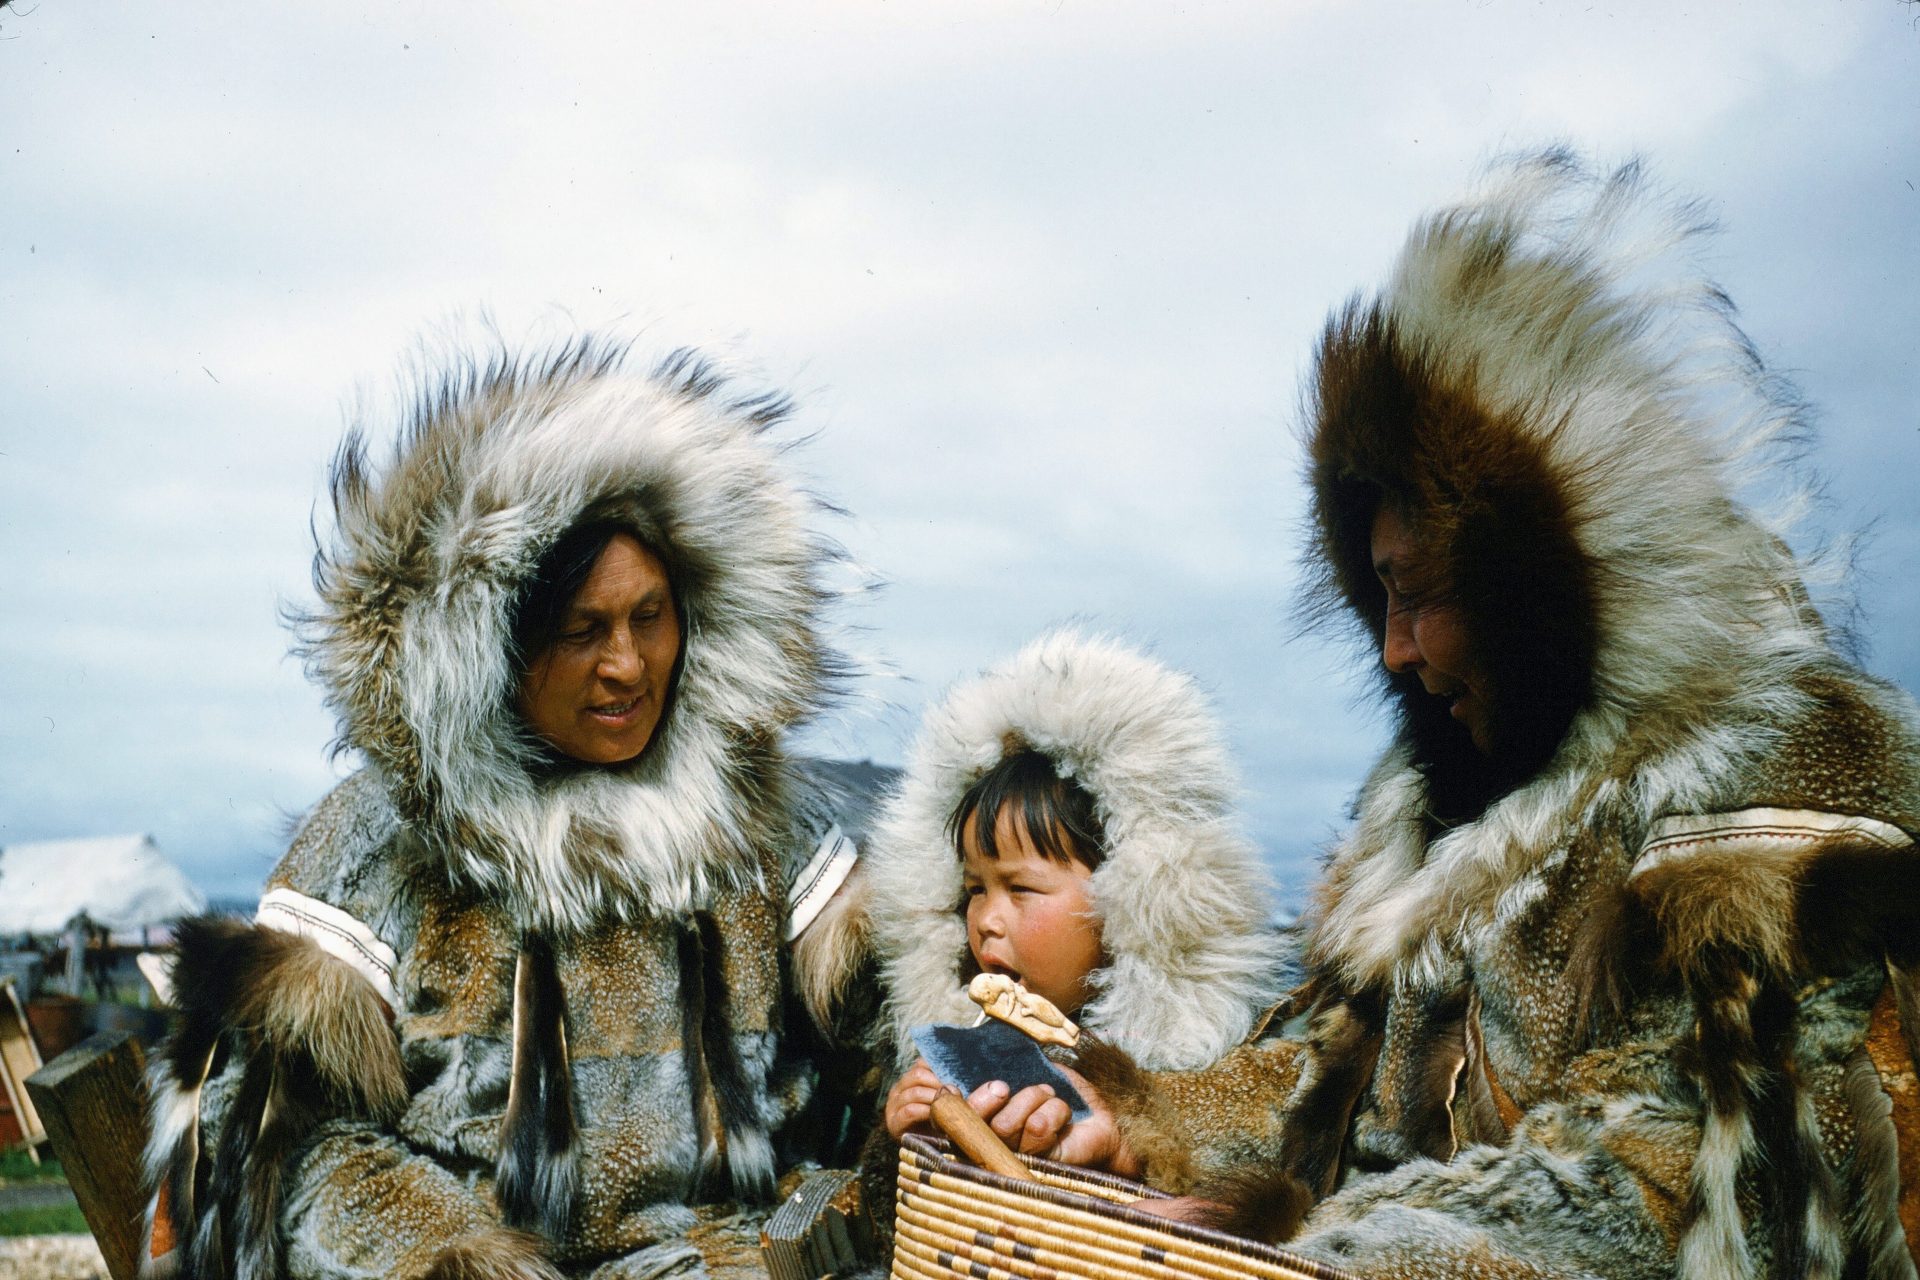 The Inuit Circumpolar Council (ICC)